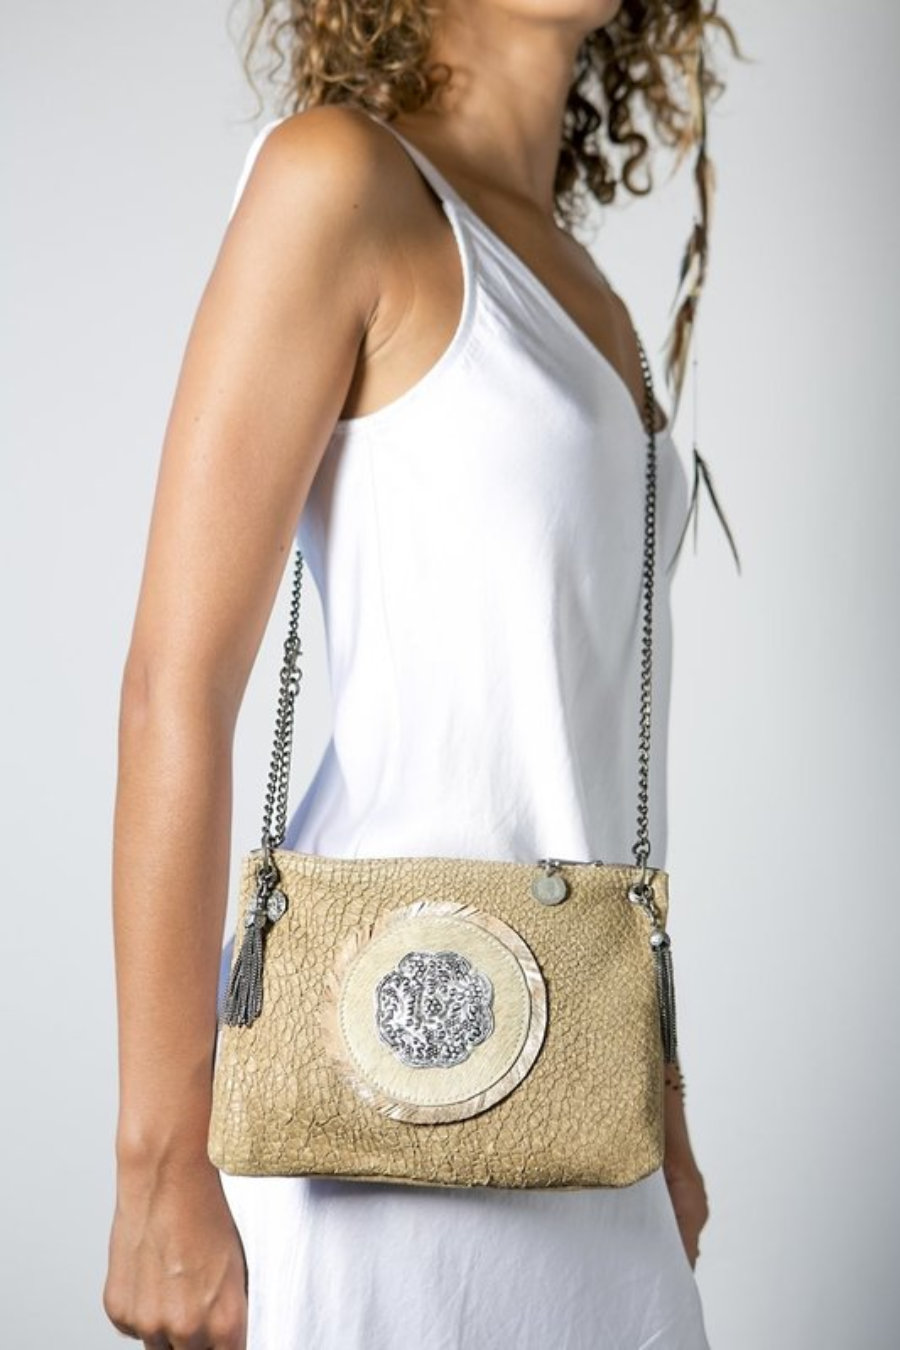 The Beige and Gold Metallic Handmade Leather Handbag